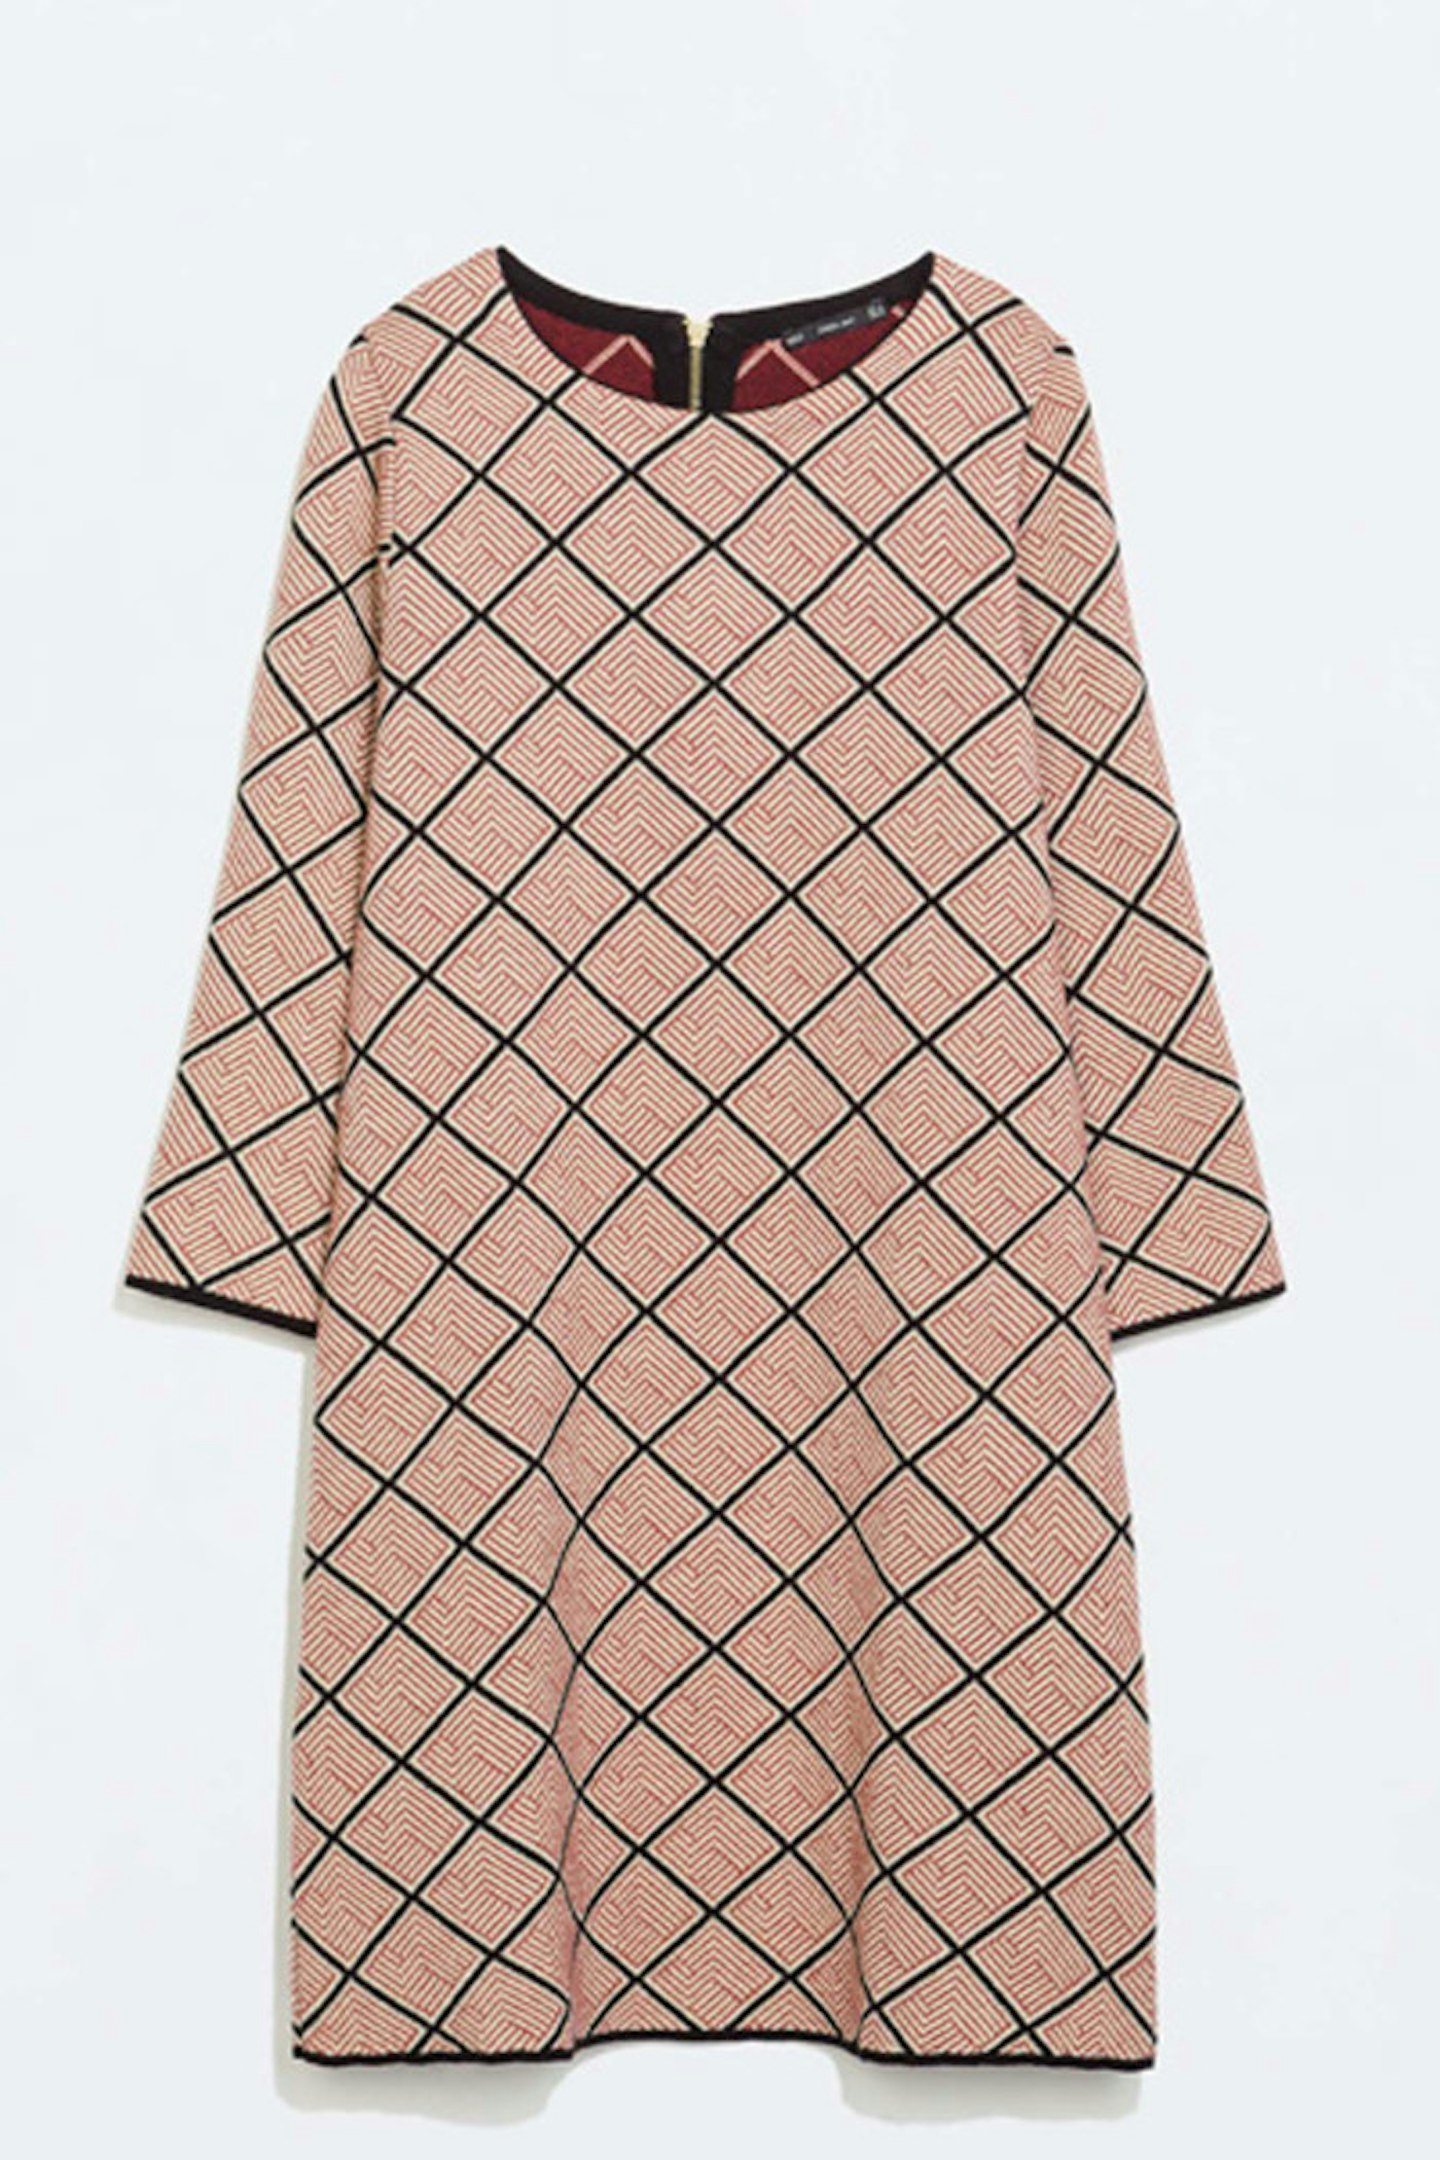 48. Jaquared Dress, £39.99, Zara